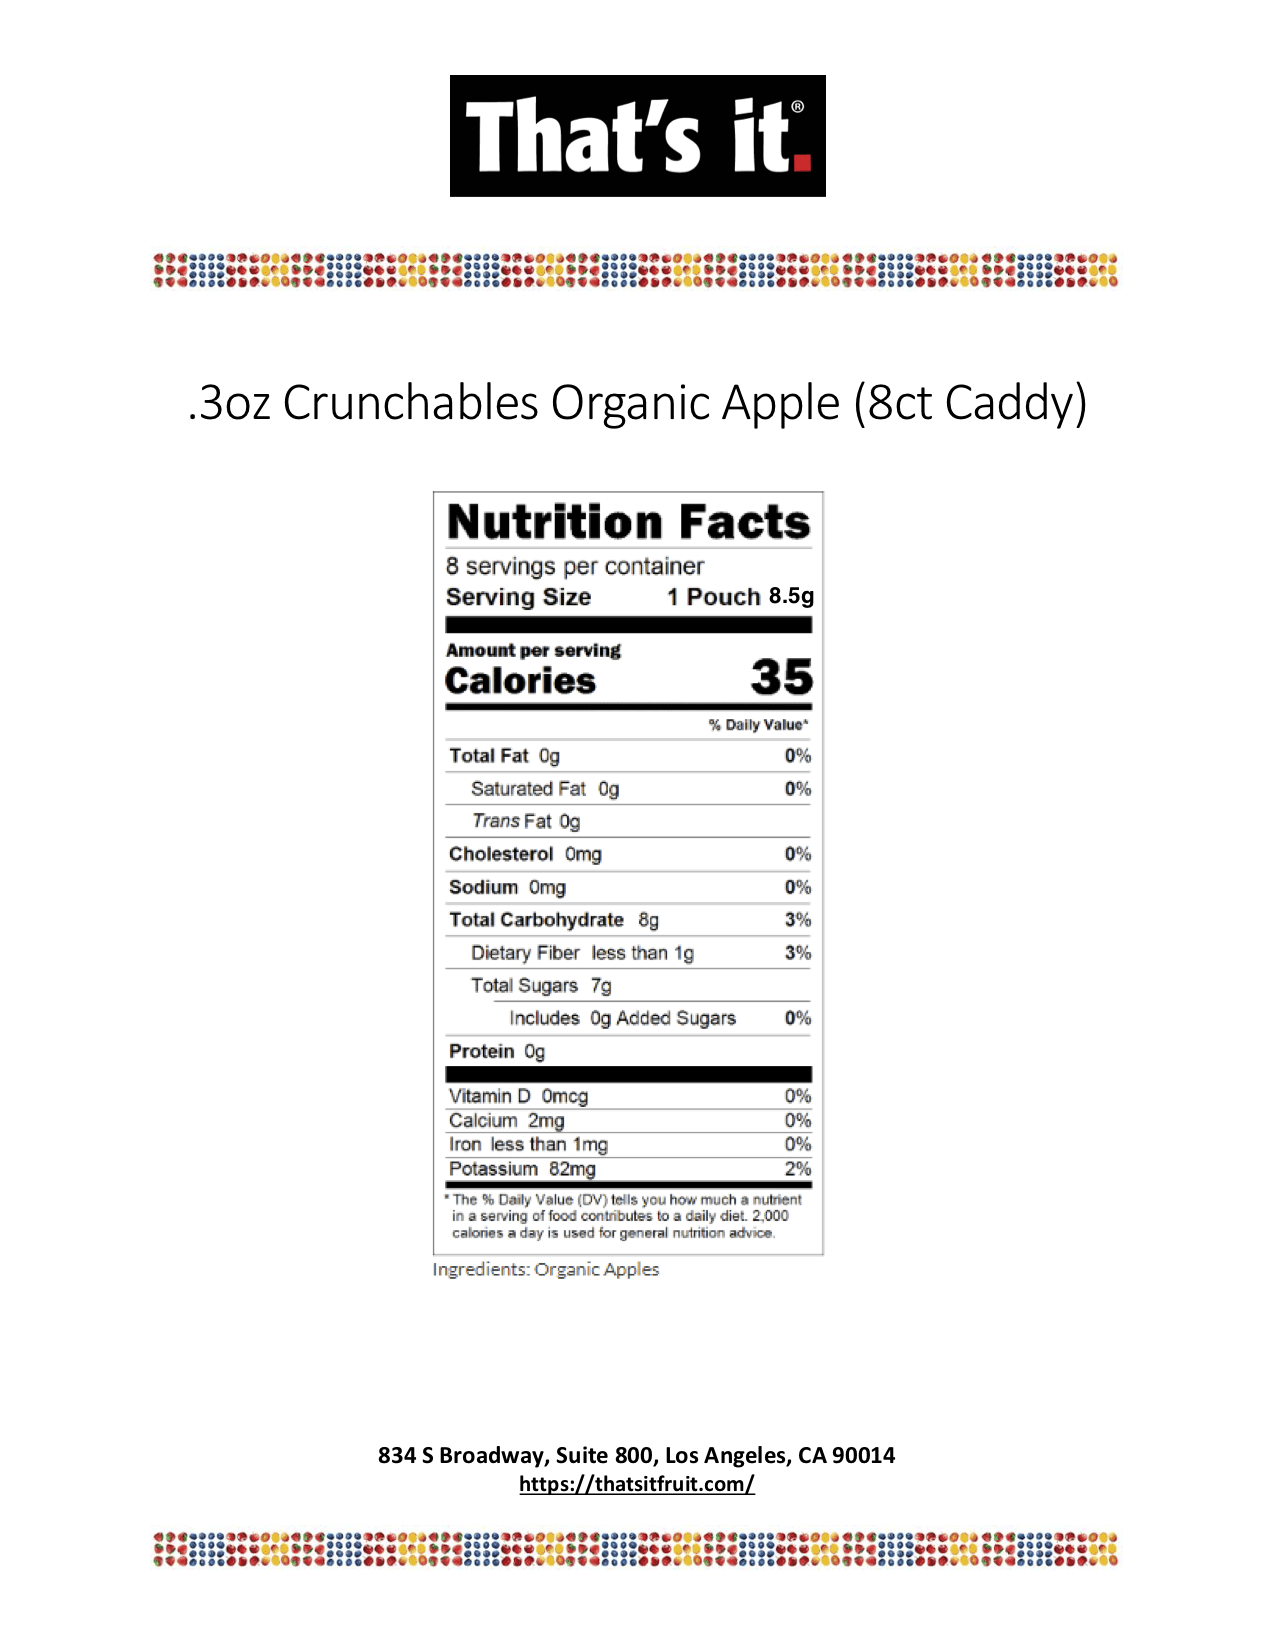 That's It Crunchables Organic Apple 6 innerpacks per case 2.4 oz